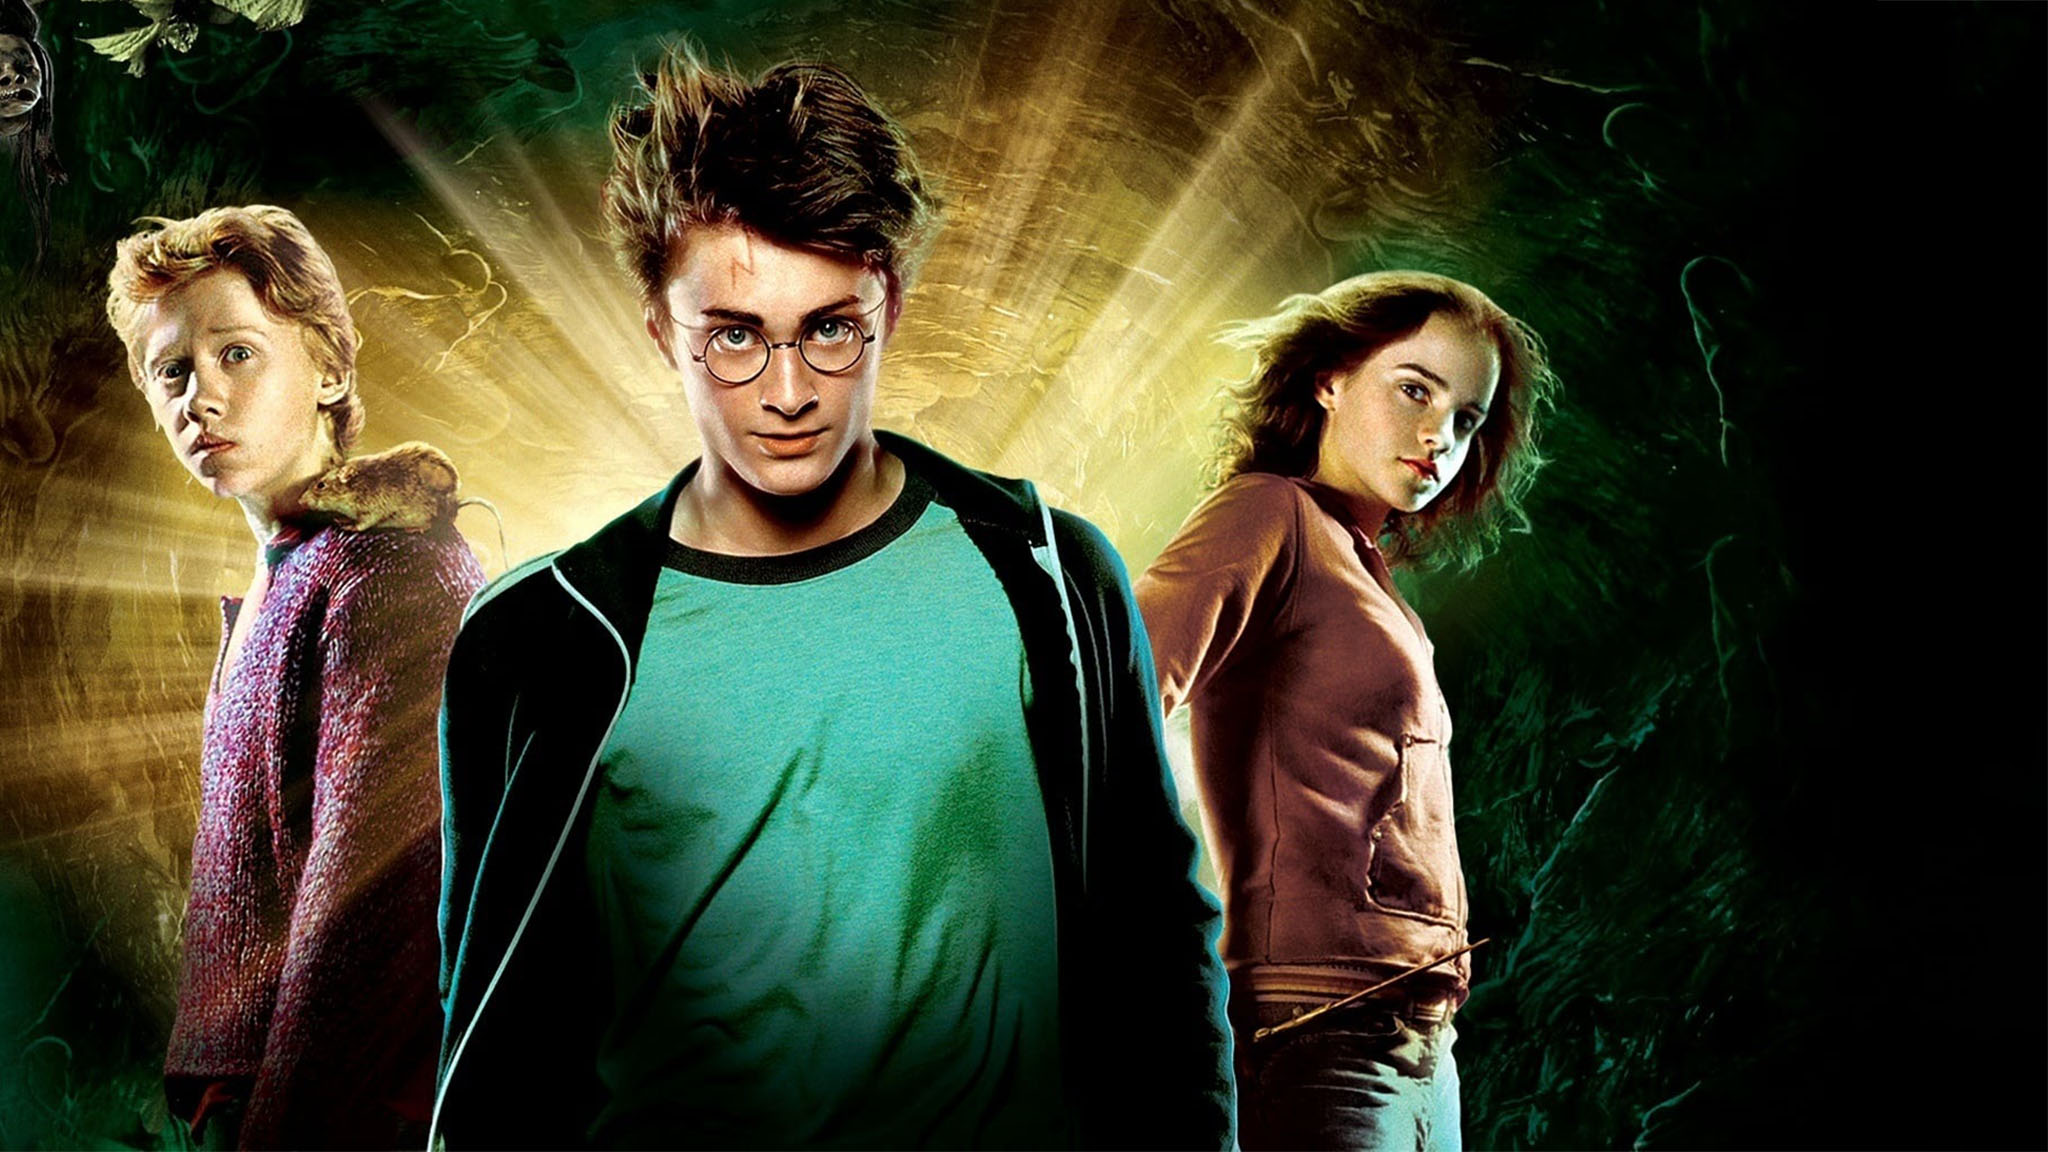 فيلم Harry Potter and the Prisoner of Azkaban 2004 مترجم